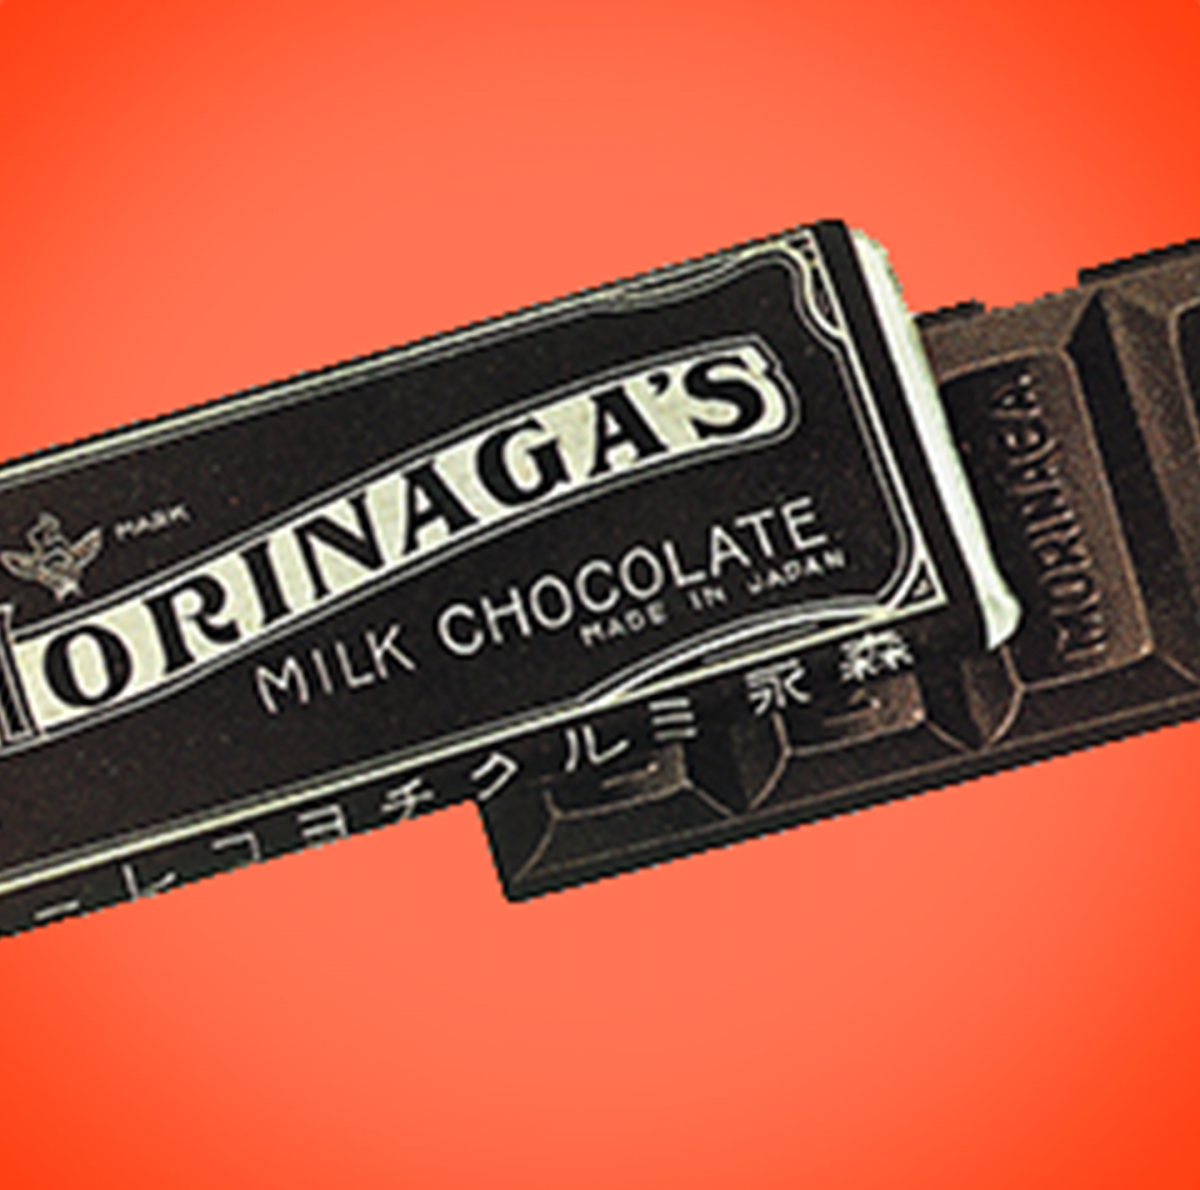 Morinaga 1918 Milk Chocolate